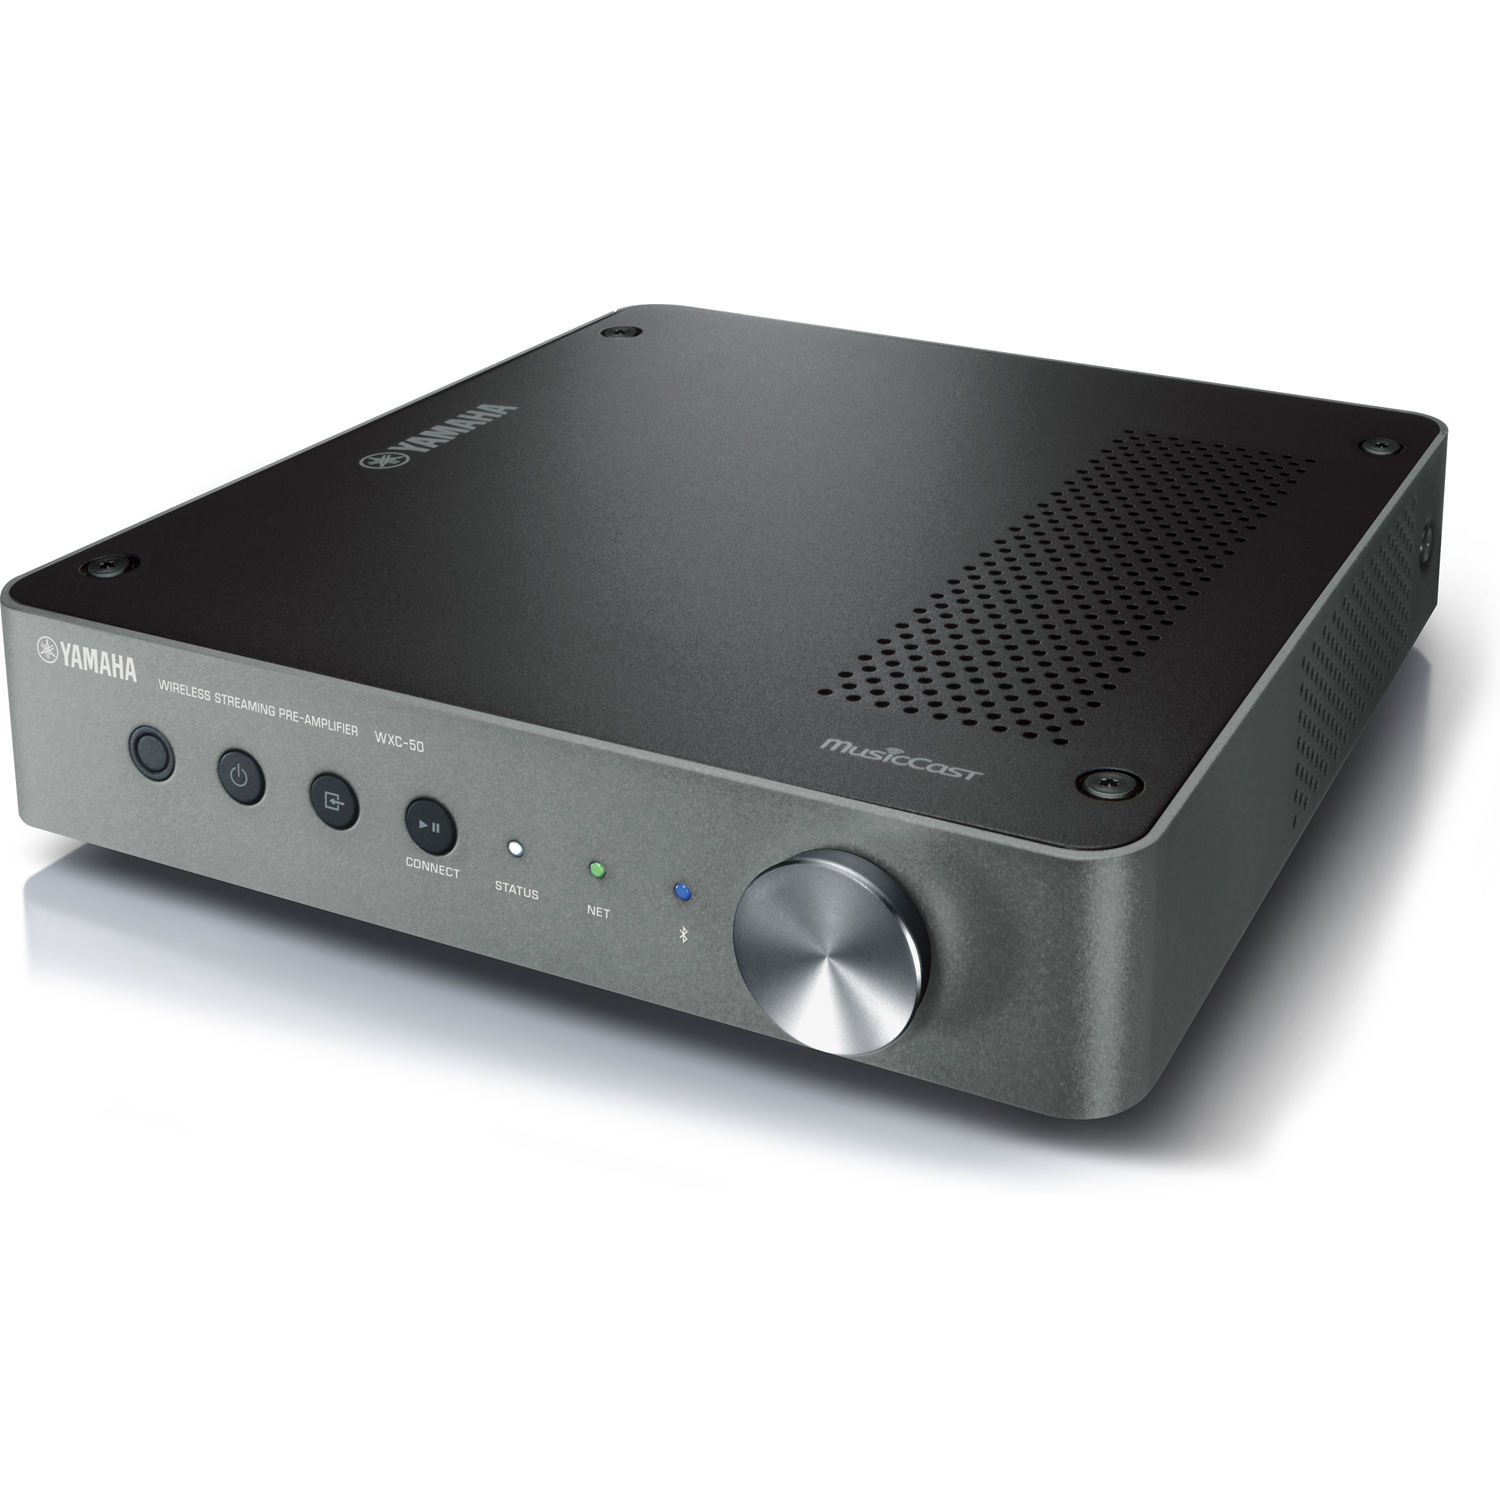 Republiek kwaliteit bouwen YAMAHA WXC-50 MusicCast Wireless Streaming Preamplifier | Accessories4less